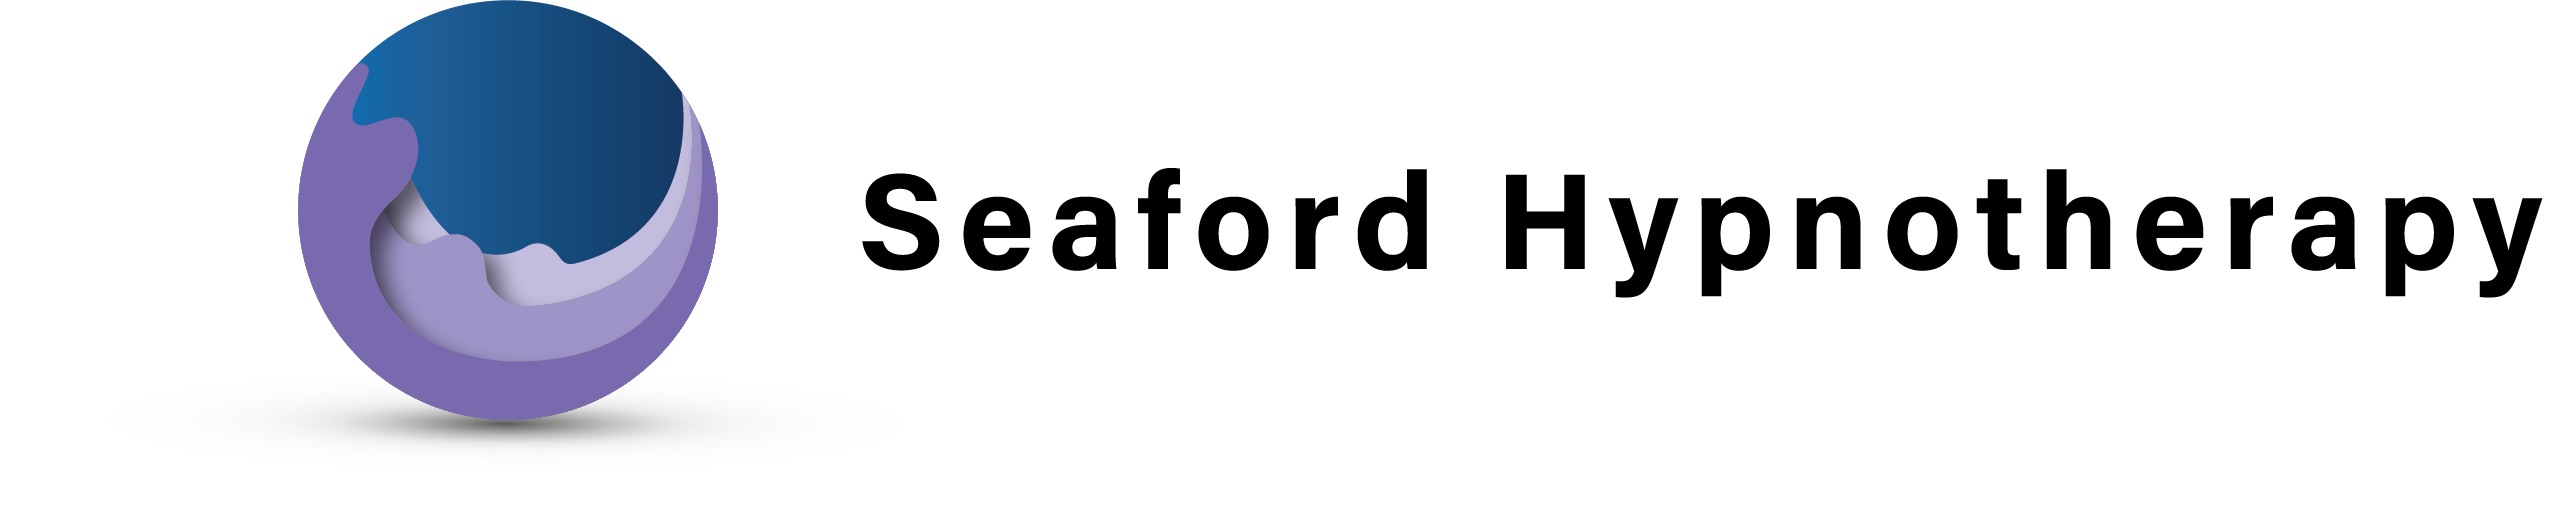 Seaford Hypnotherapy Logo